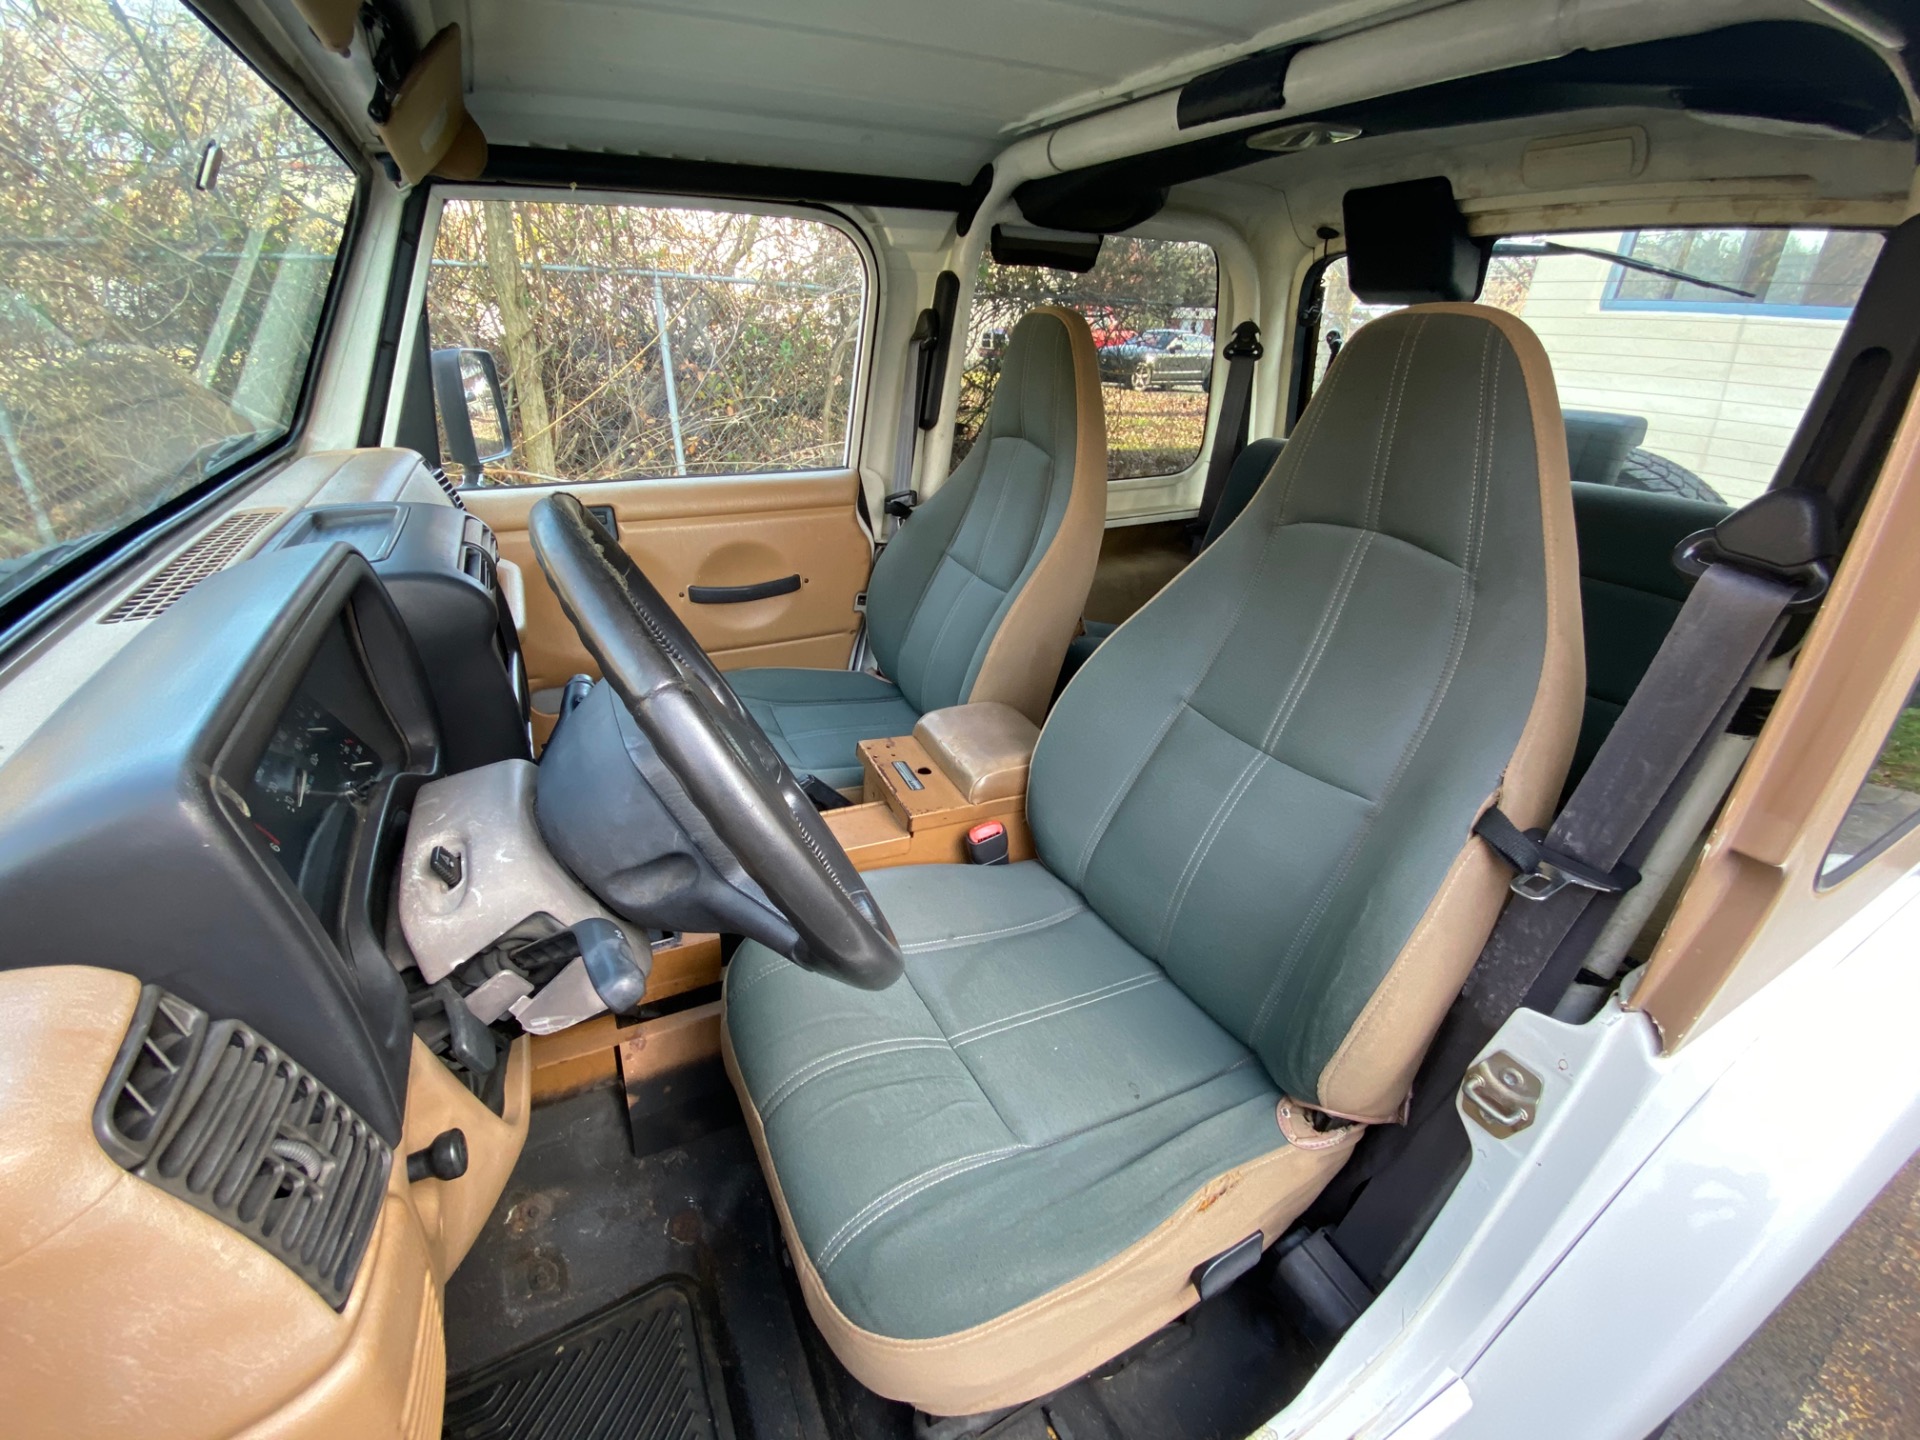 Used 1997 Jeep Wrangler Sahara Sahara For Sale ($4,900) | Legend Leasing  Stock #7509